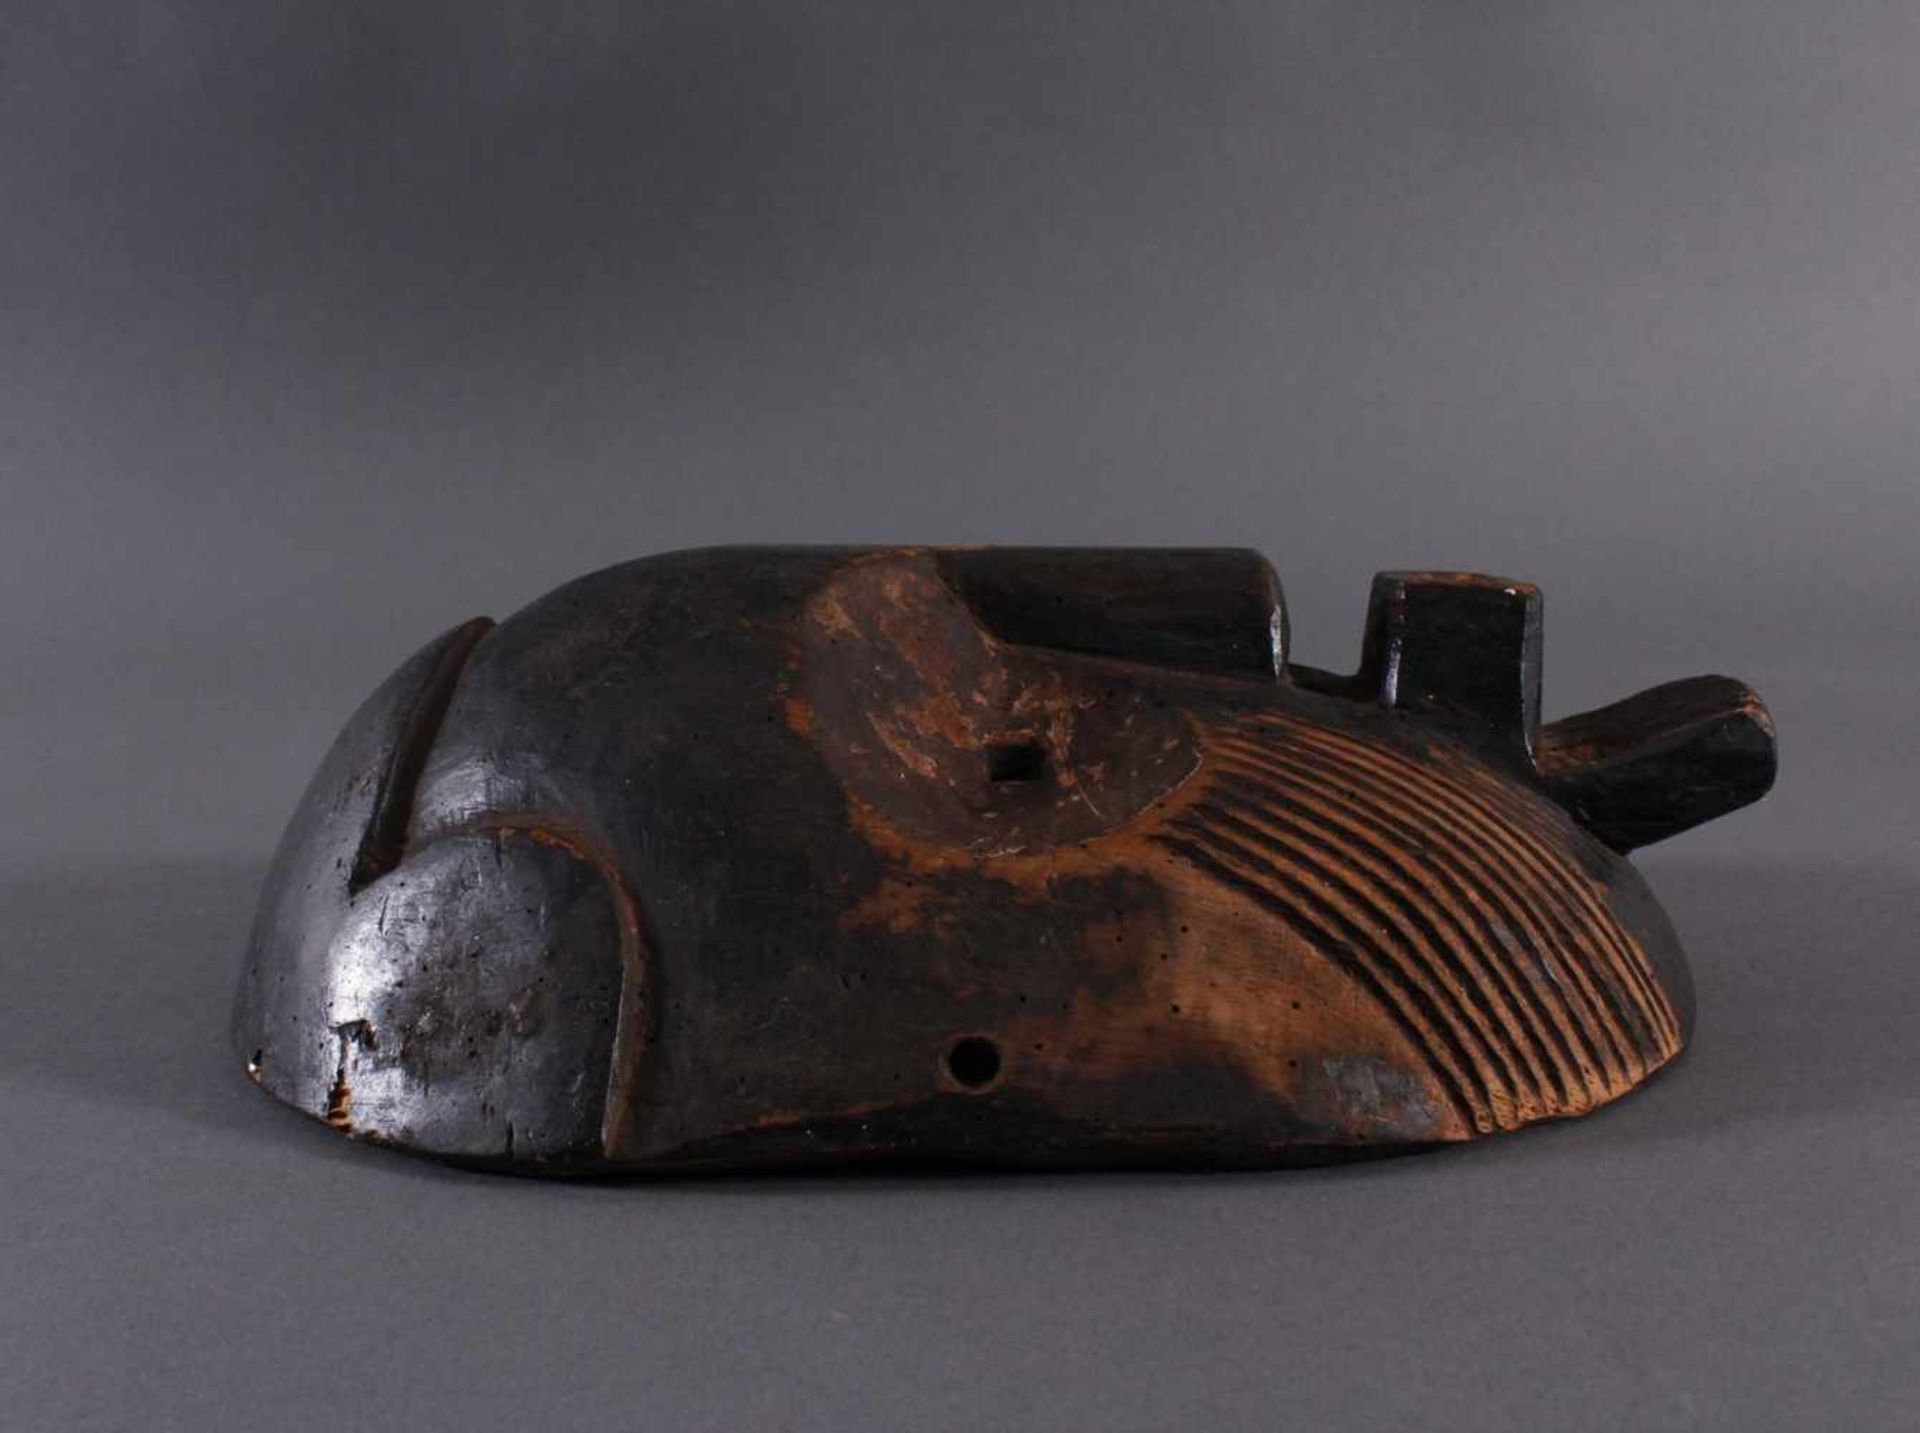 Antike Maske, Zaire/KongoHolz, geschnitzt, dunkel patiniert. Gesicht mit linearen Rillendekor, ca. - Bild 3 aus 6